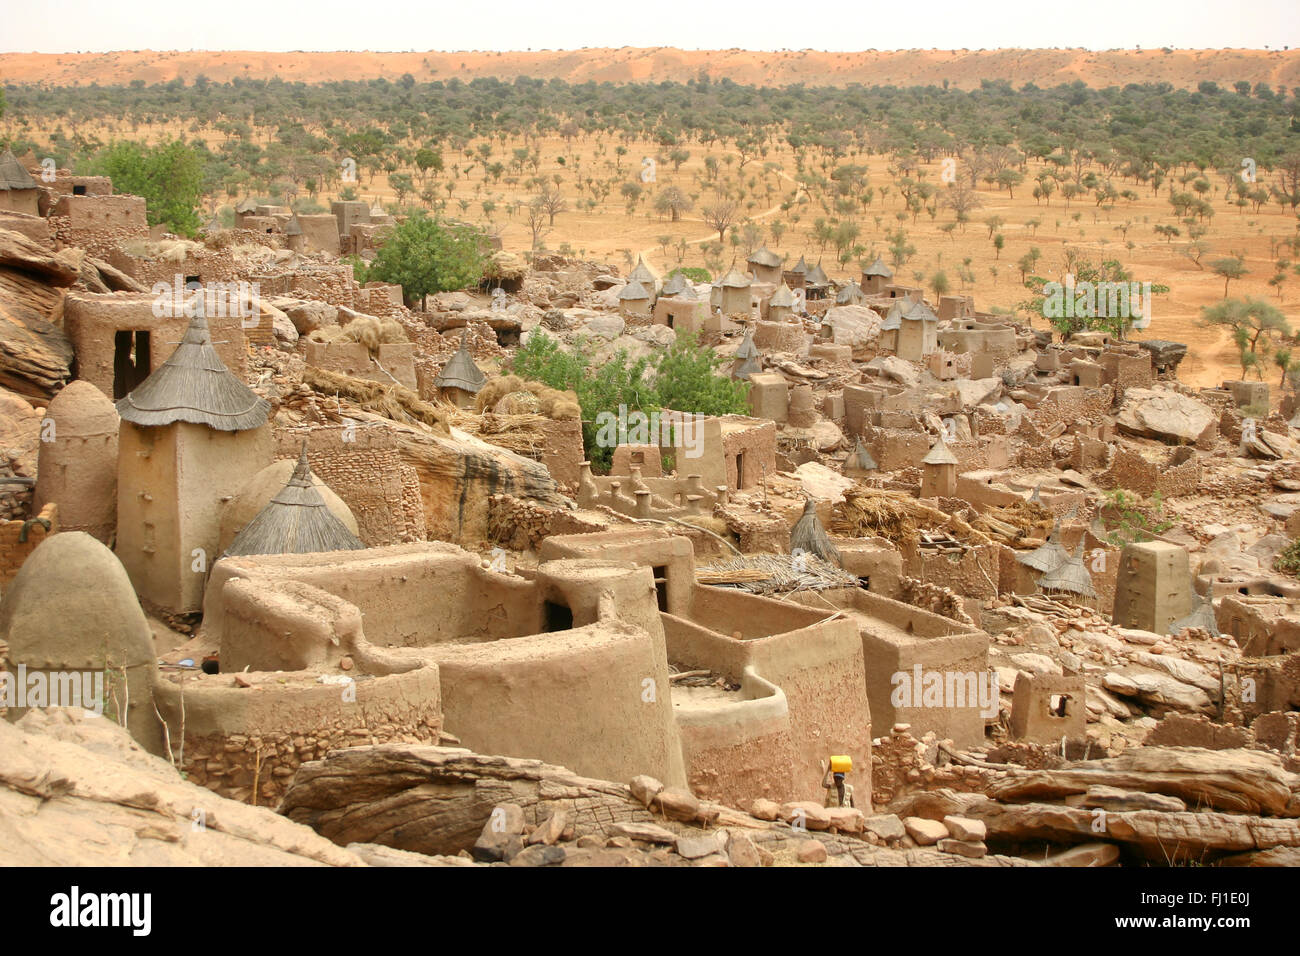 Life in Dogon traditional village , Mali Stock Photo